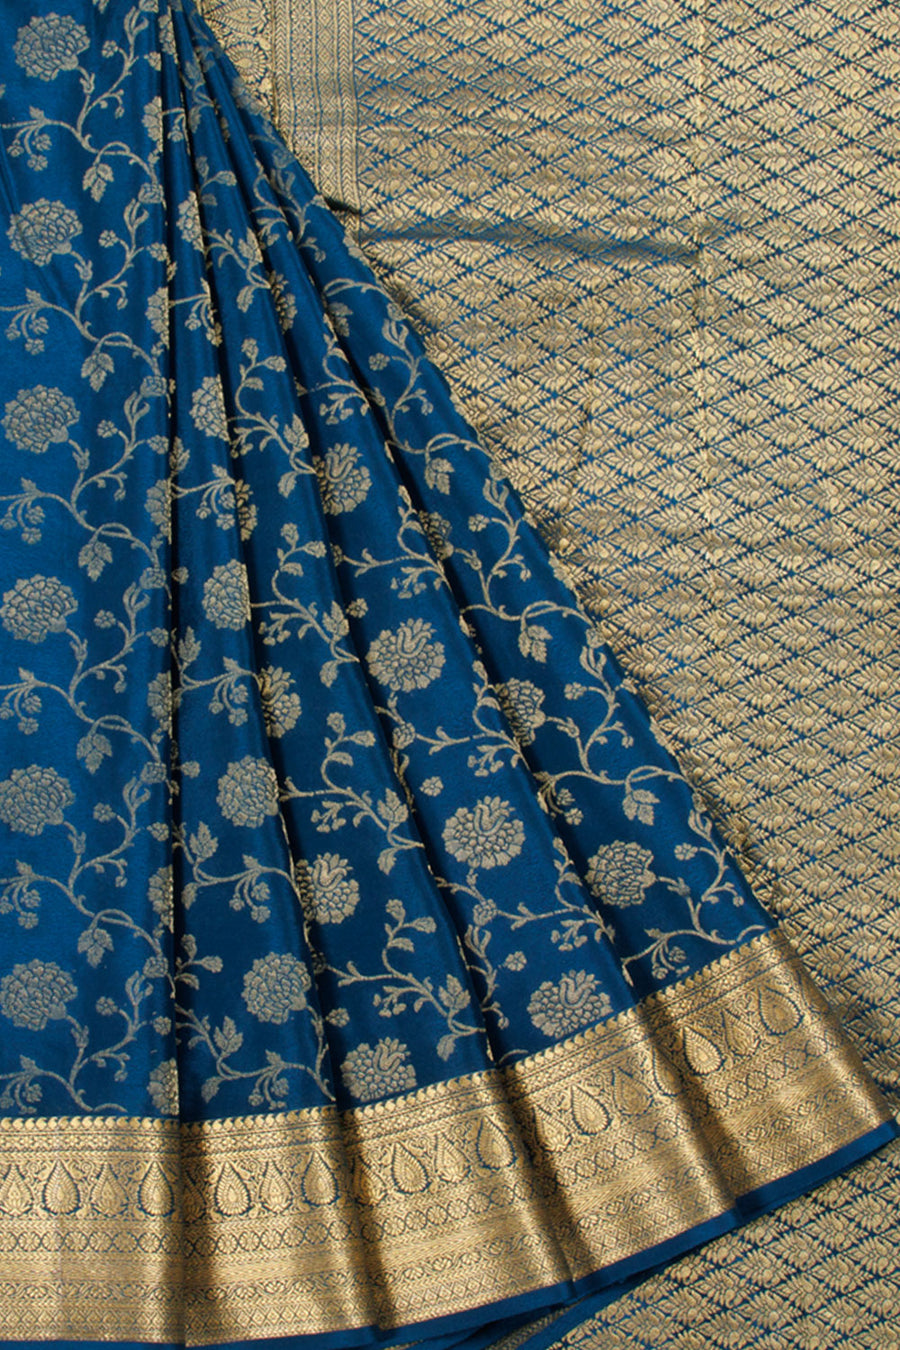 Teal Blue Mysore Crepe Silk Saree with allover Floral Design, Zari Border and Floral Pallu